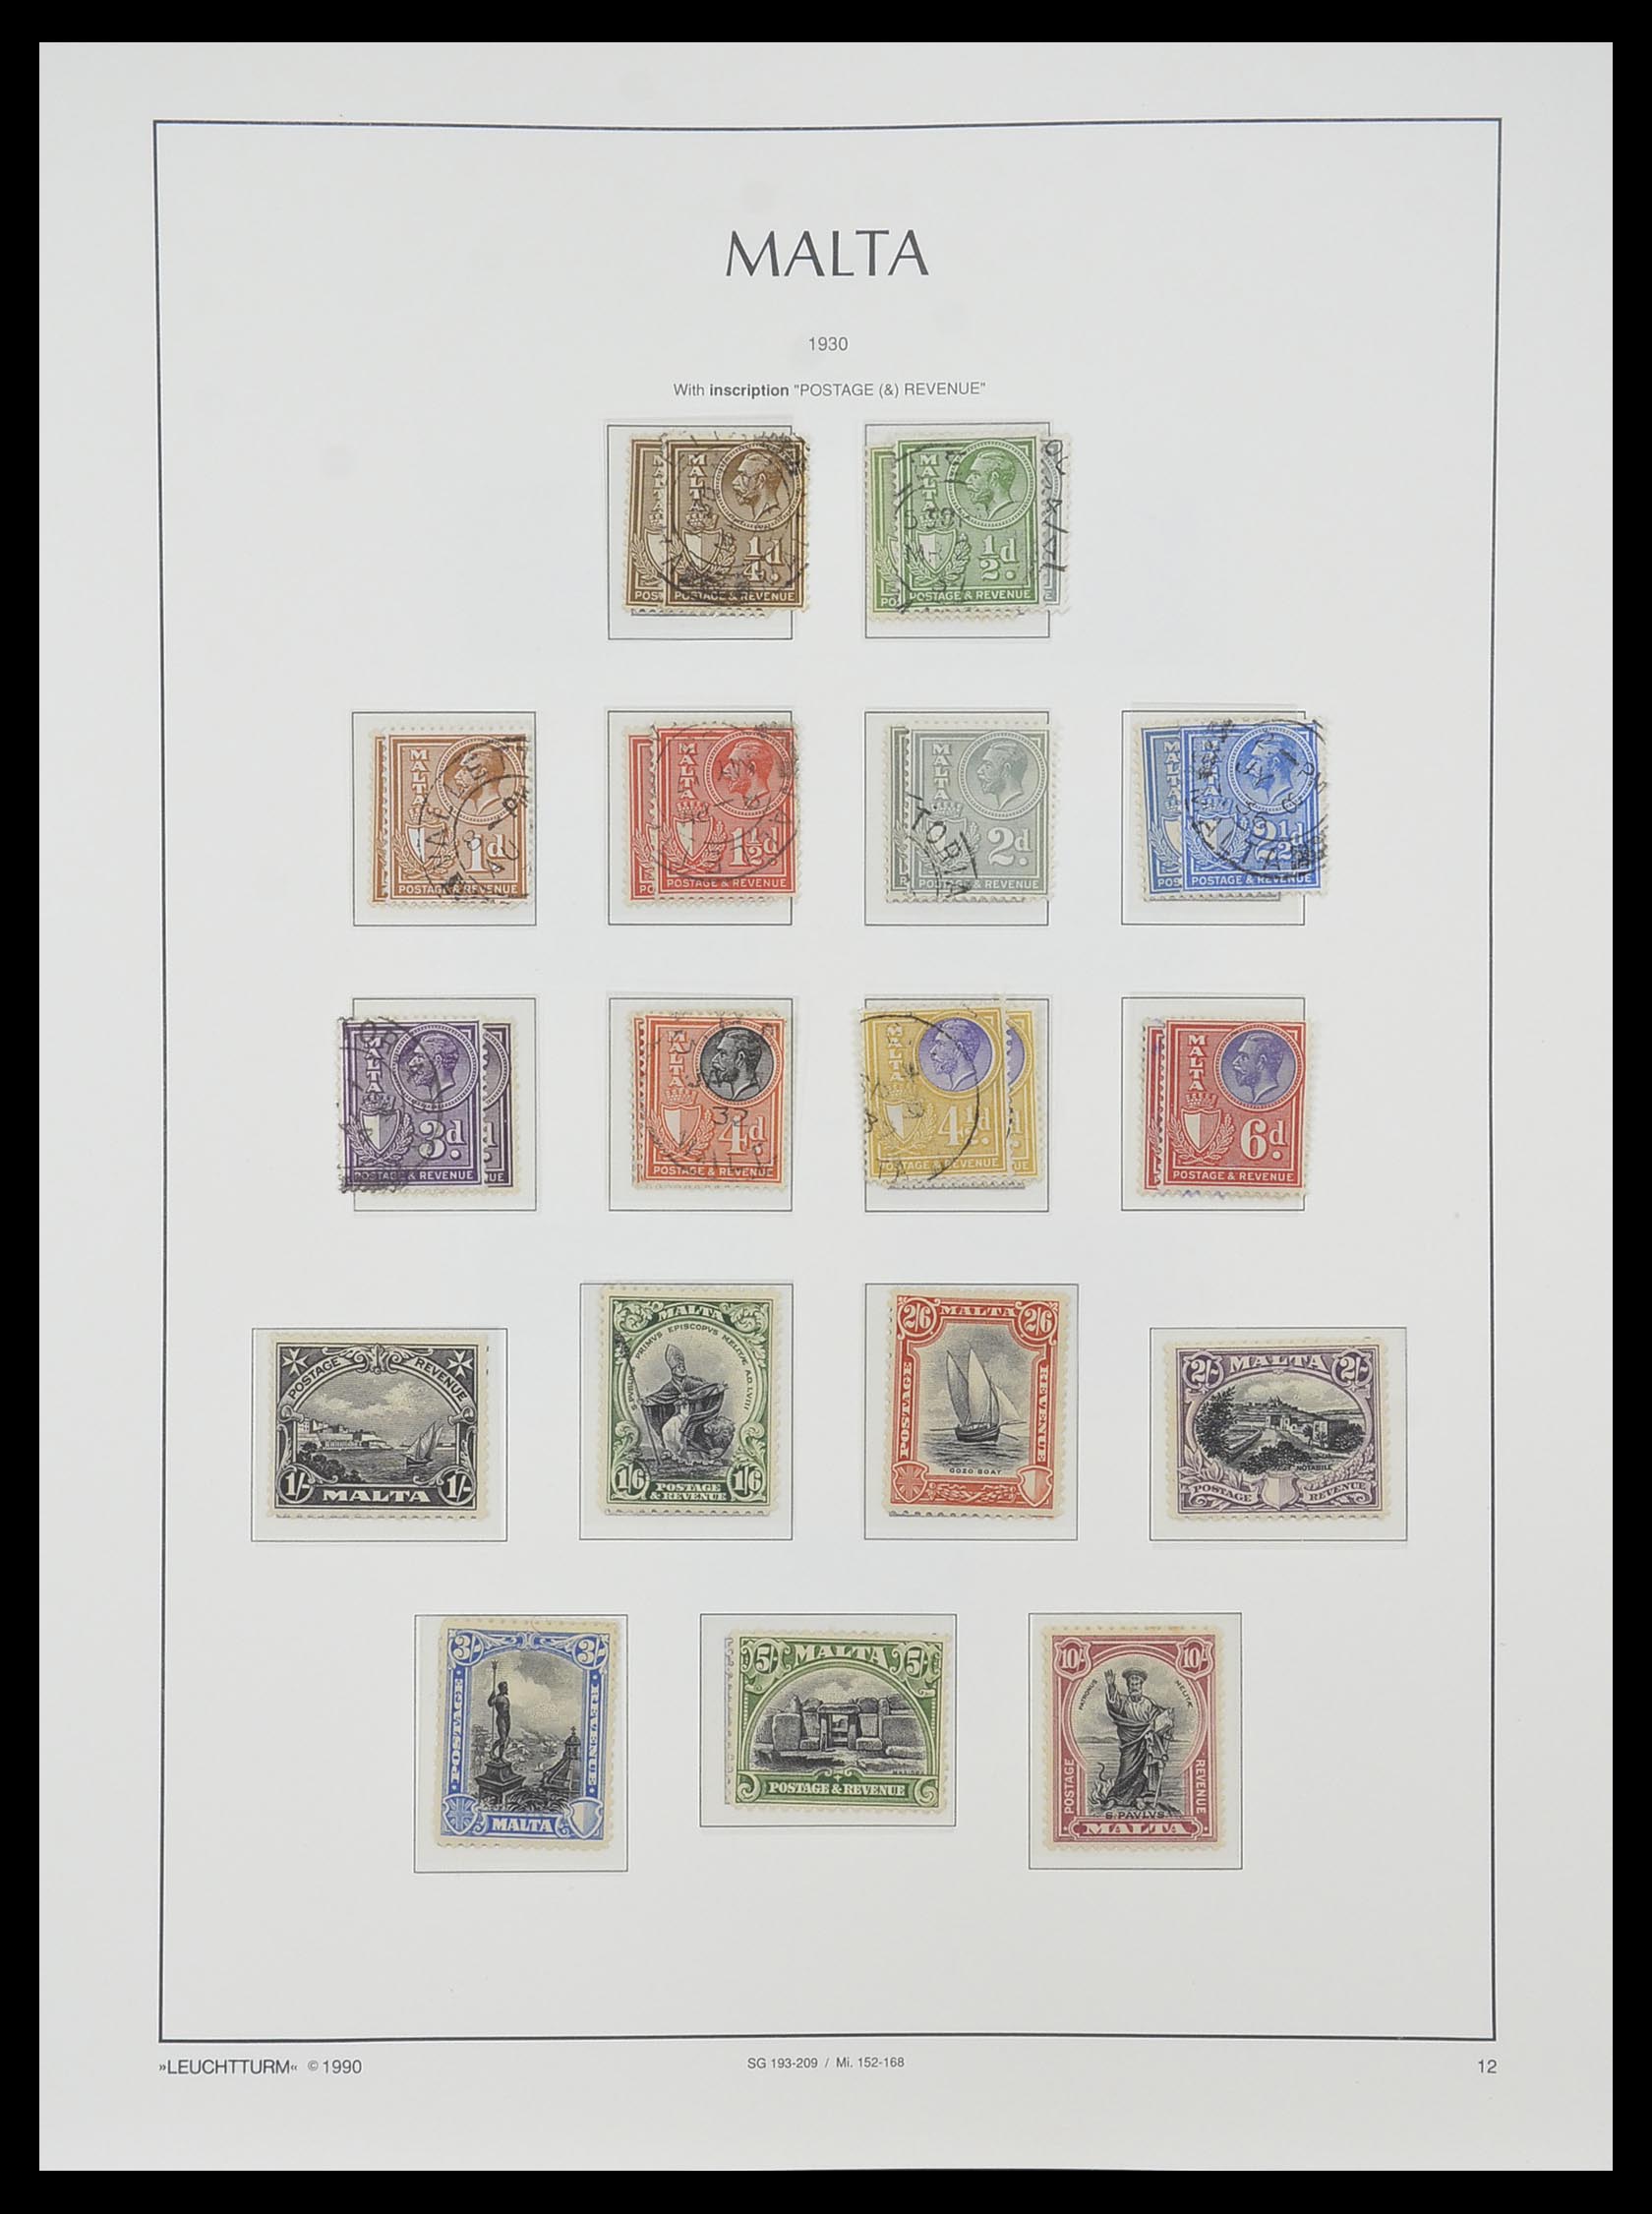 33968 012 - Stamp collection 33968 Malta 1861-2001.